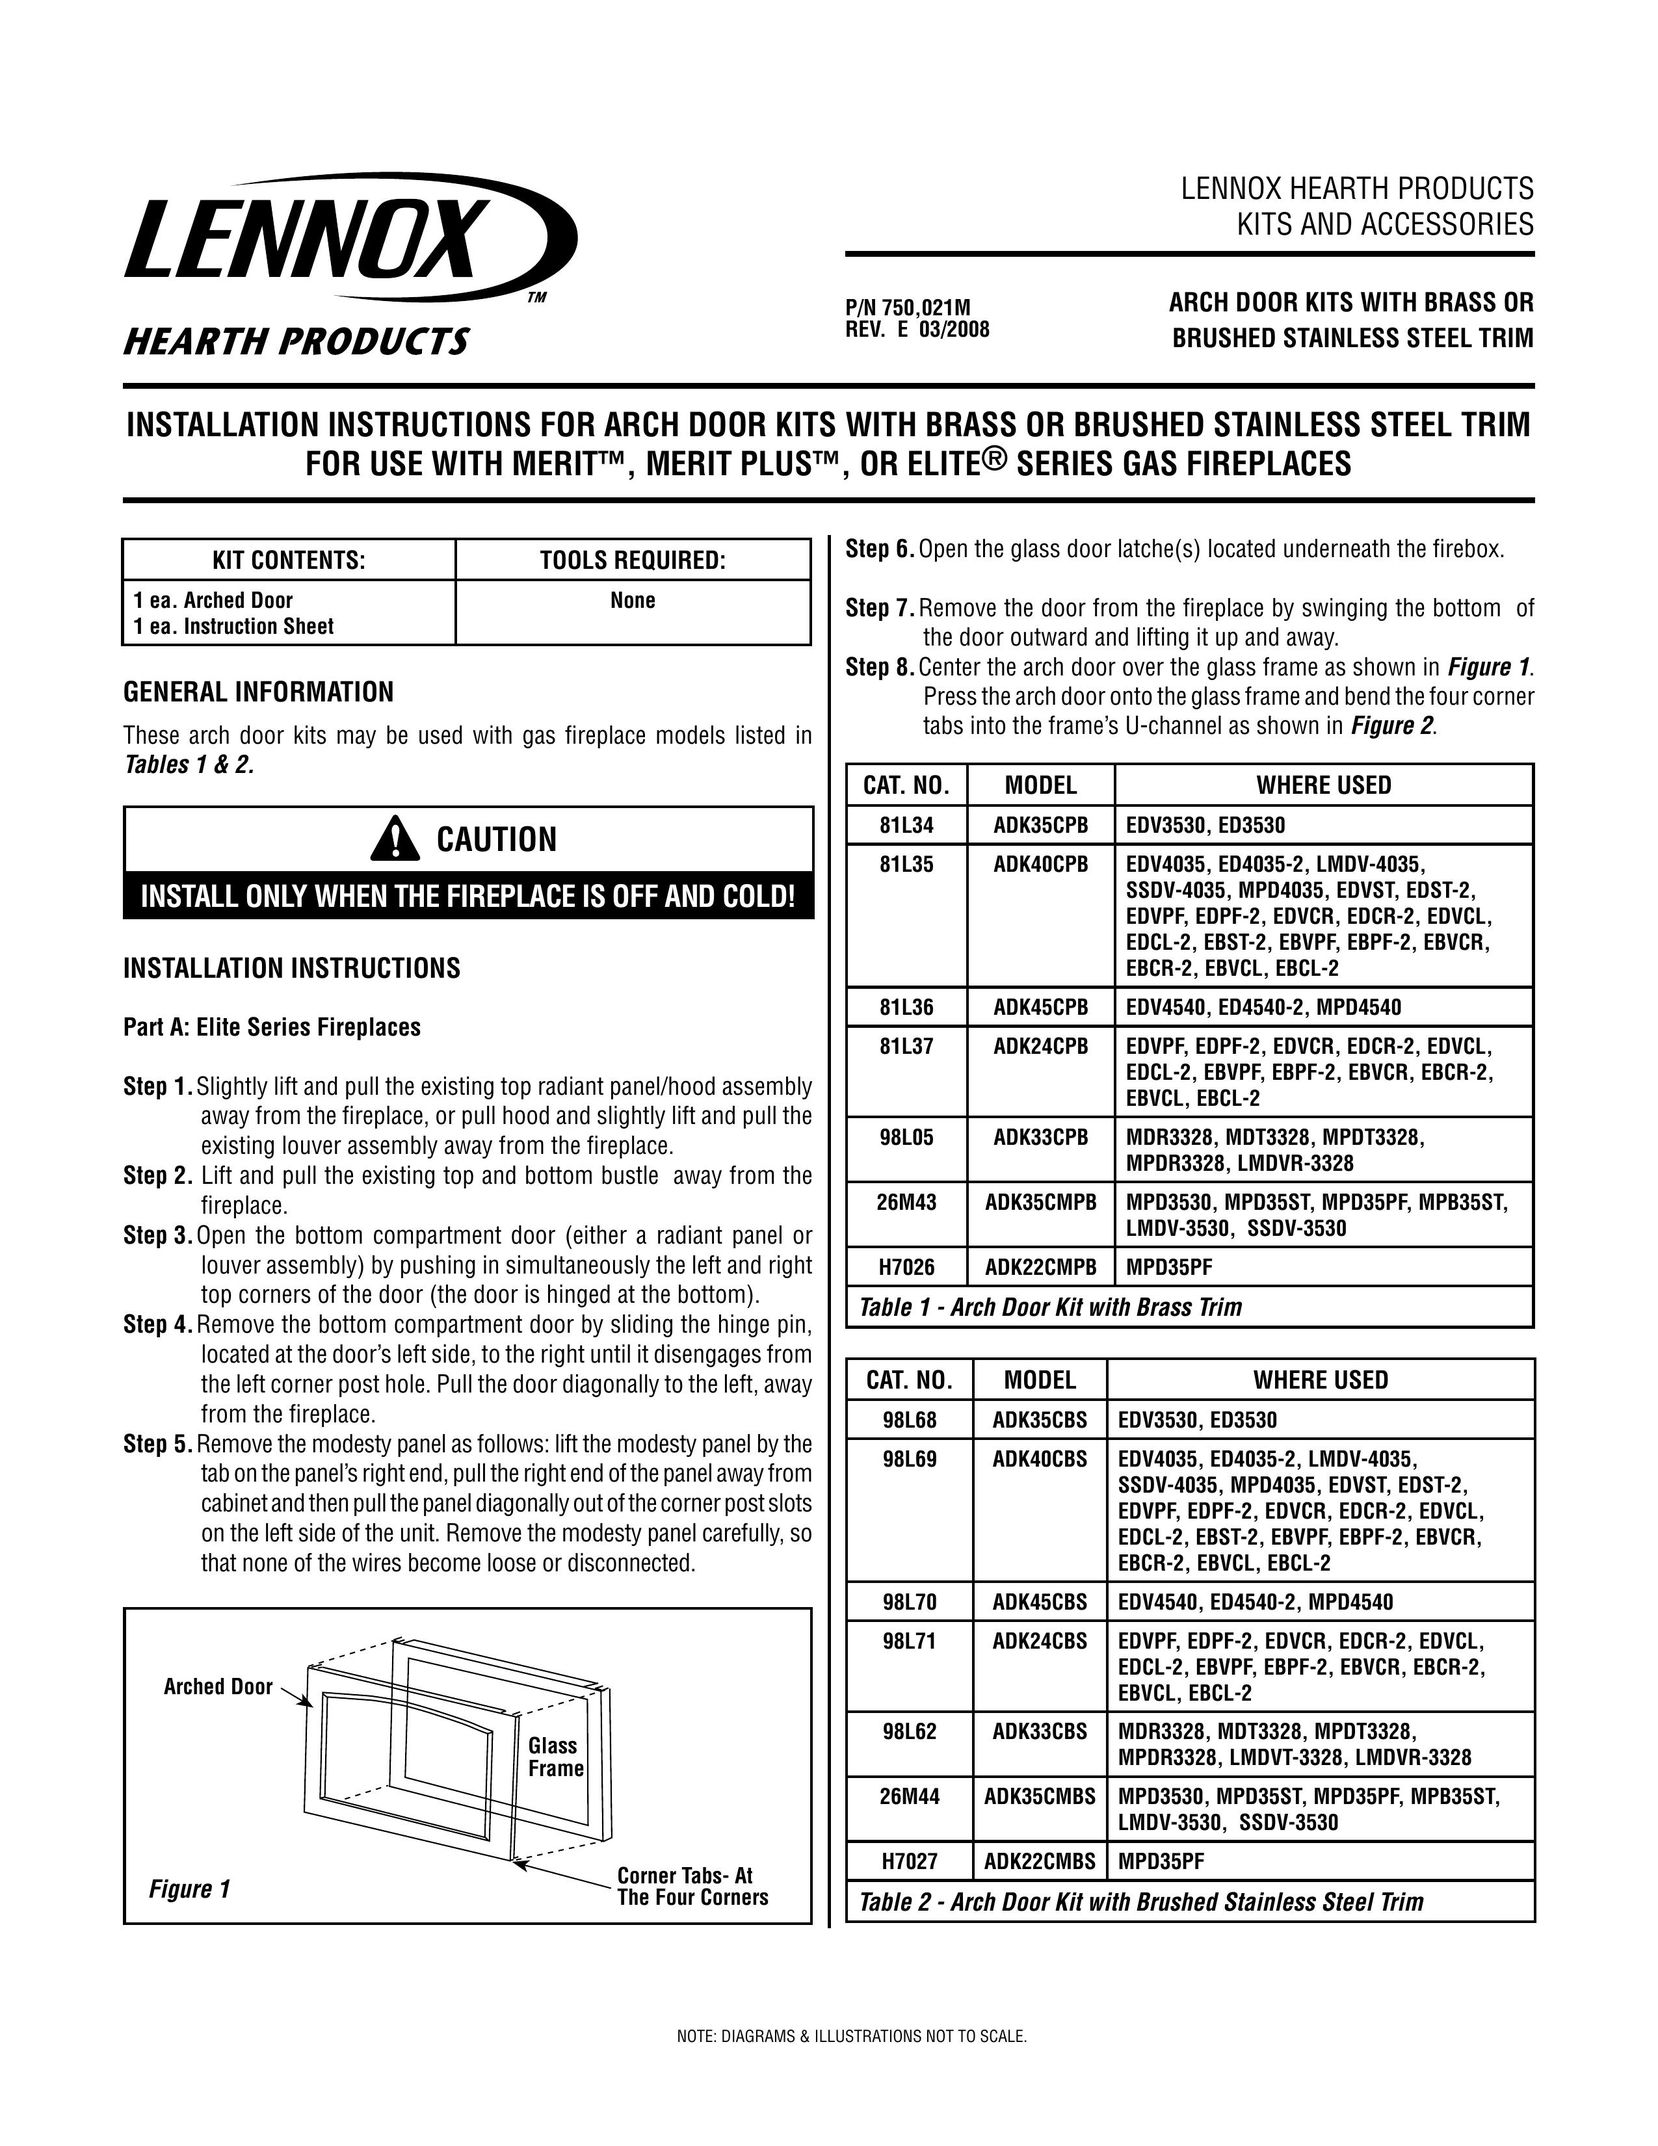 Lennox Hearth ADK35CBS Indoor Fireplace User Manual